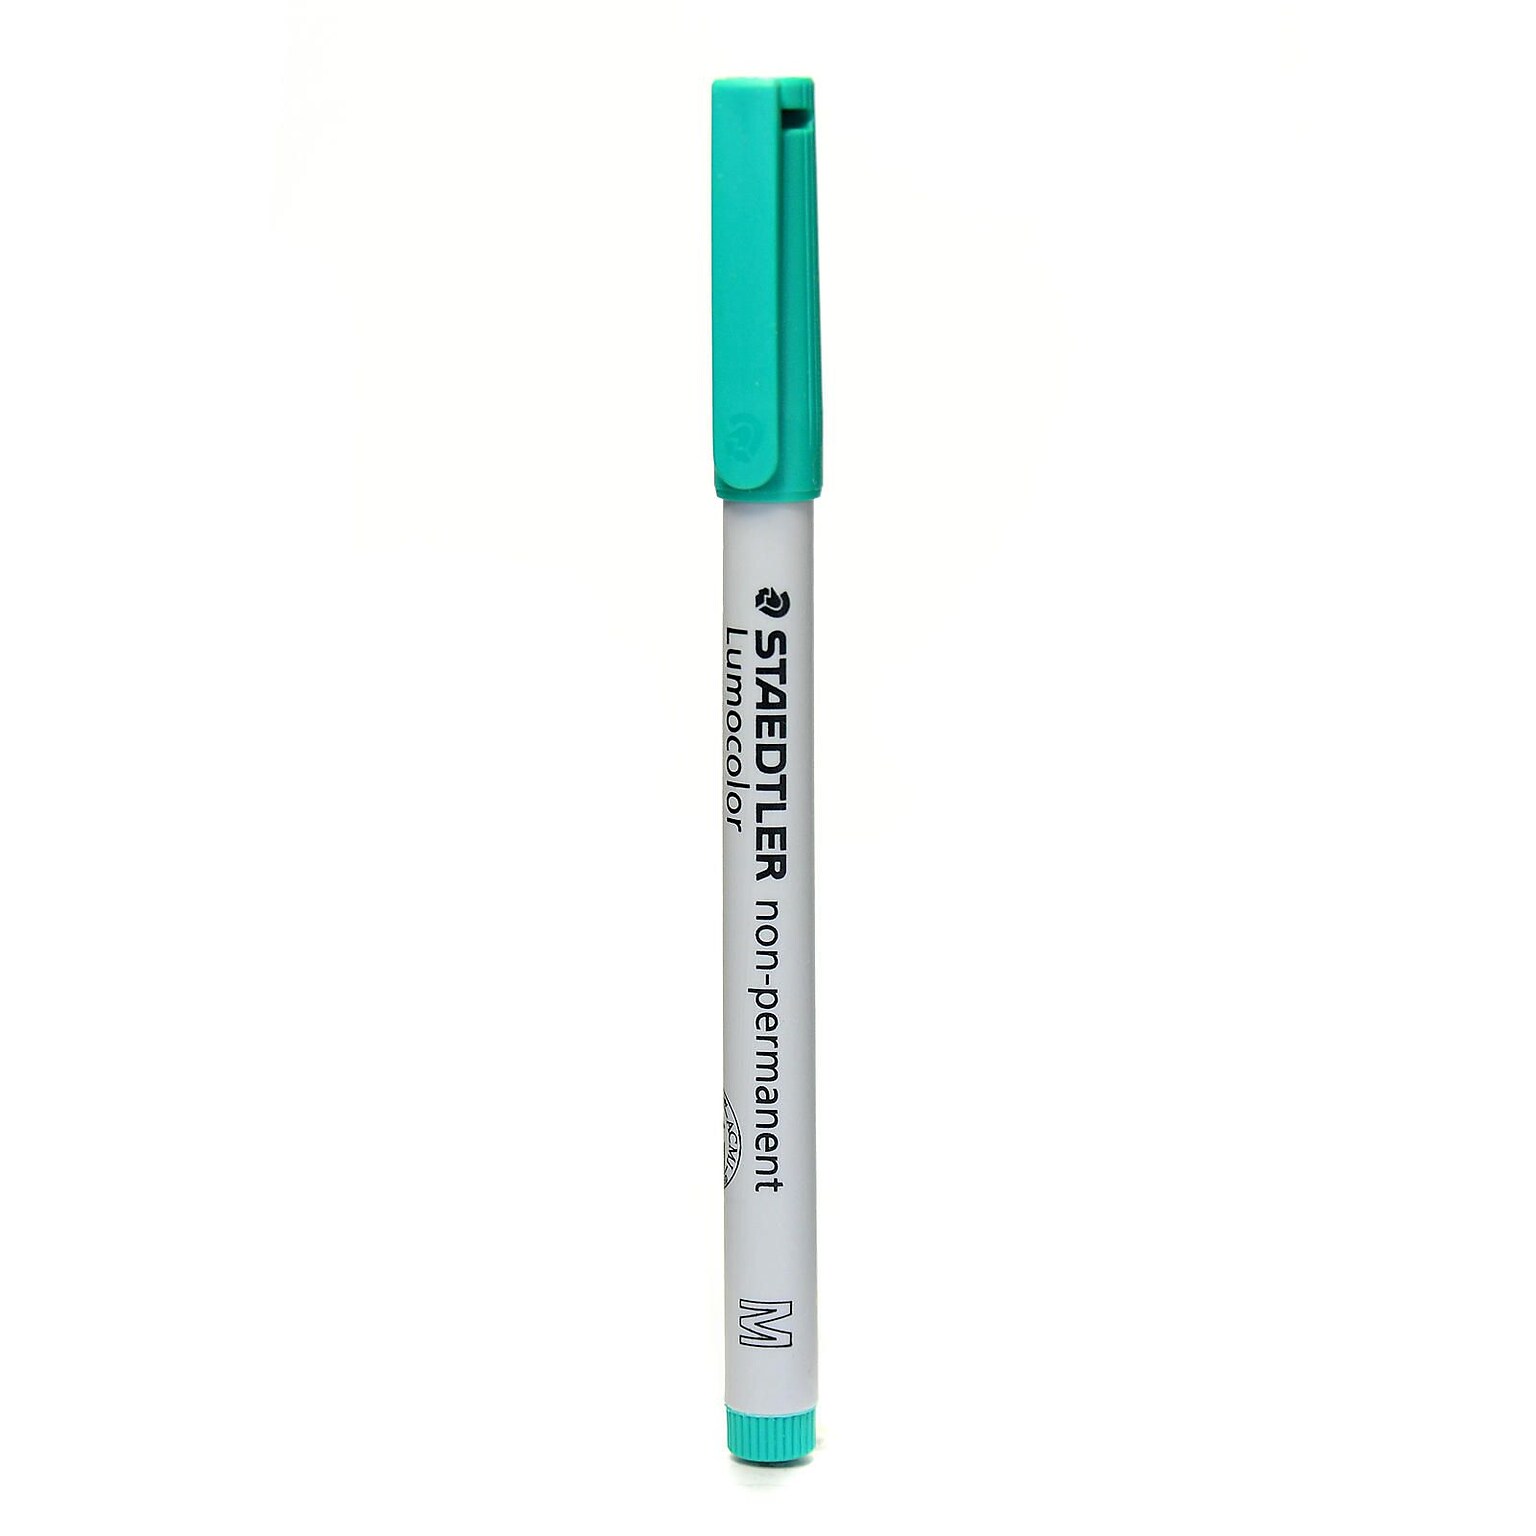 Staedtler Lumocolor Non-Permanent Overhead Projection Markers, Medium Tip, Green, 10/Pack (64391)